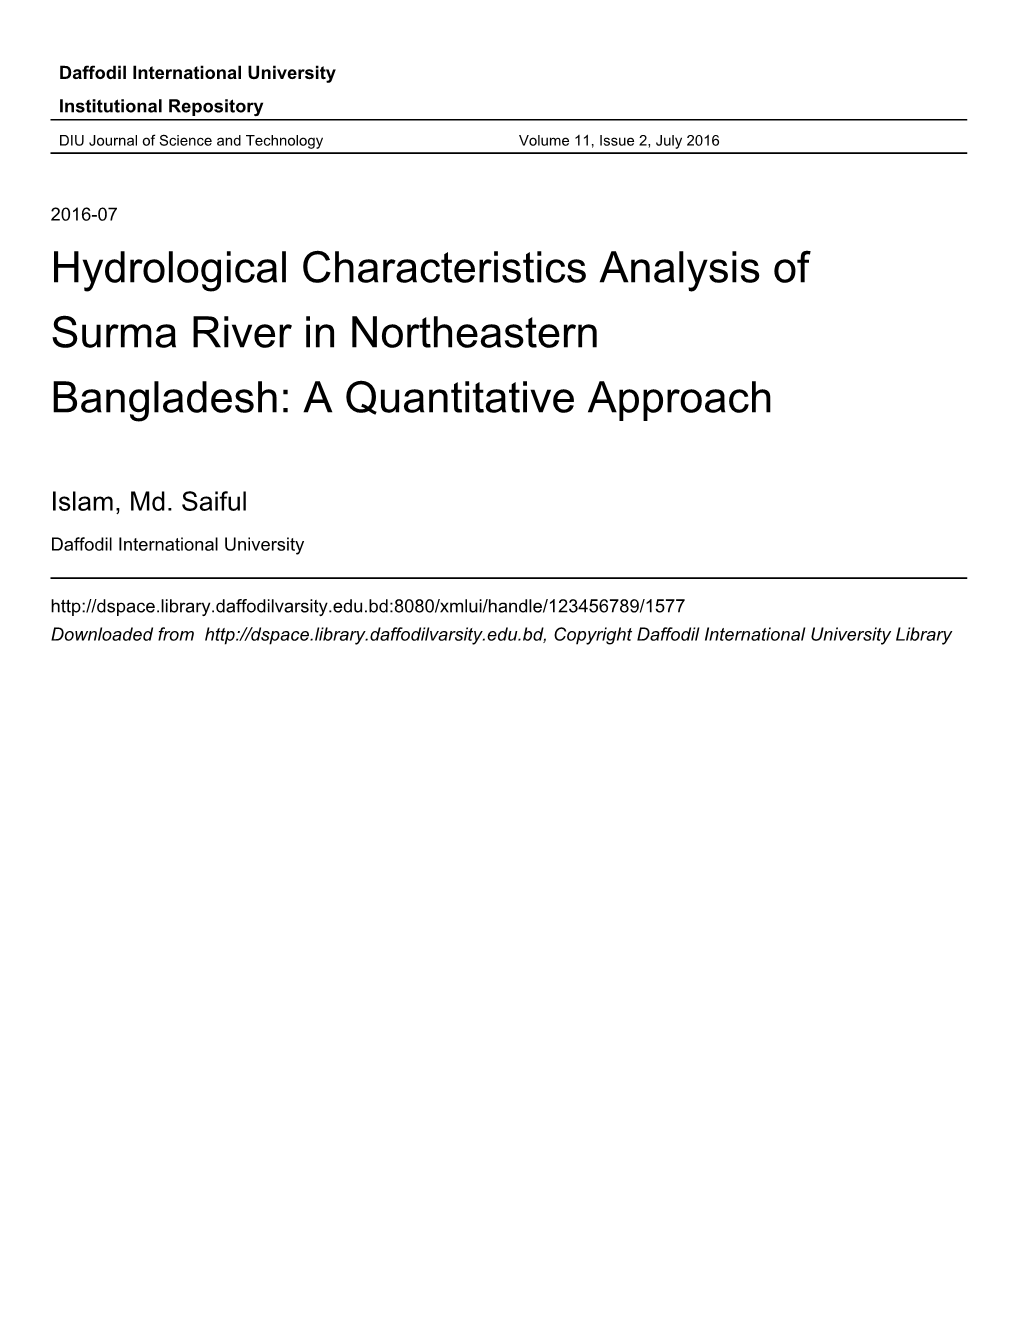 Hydrological Characteristics Analysis of Surma River in Northeastern Bangladesh: a Quantitative Approach